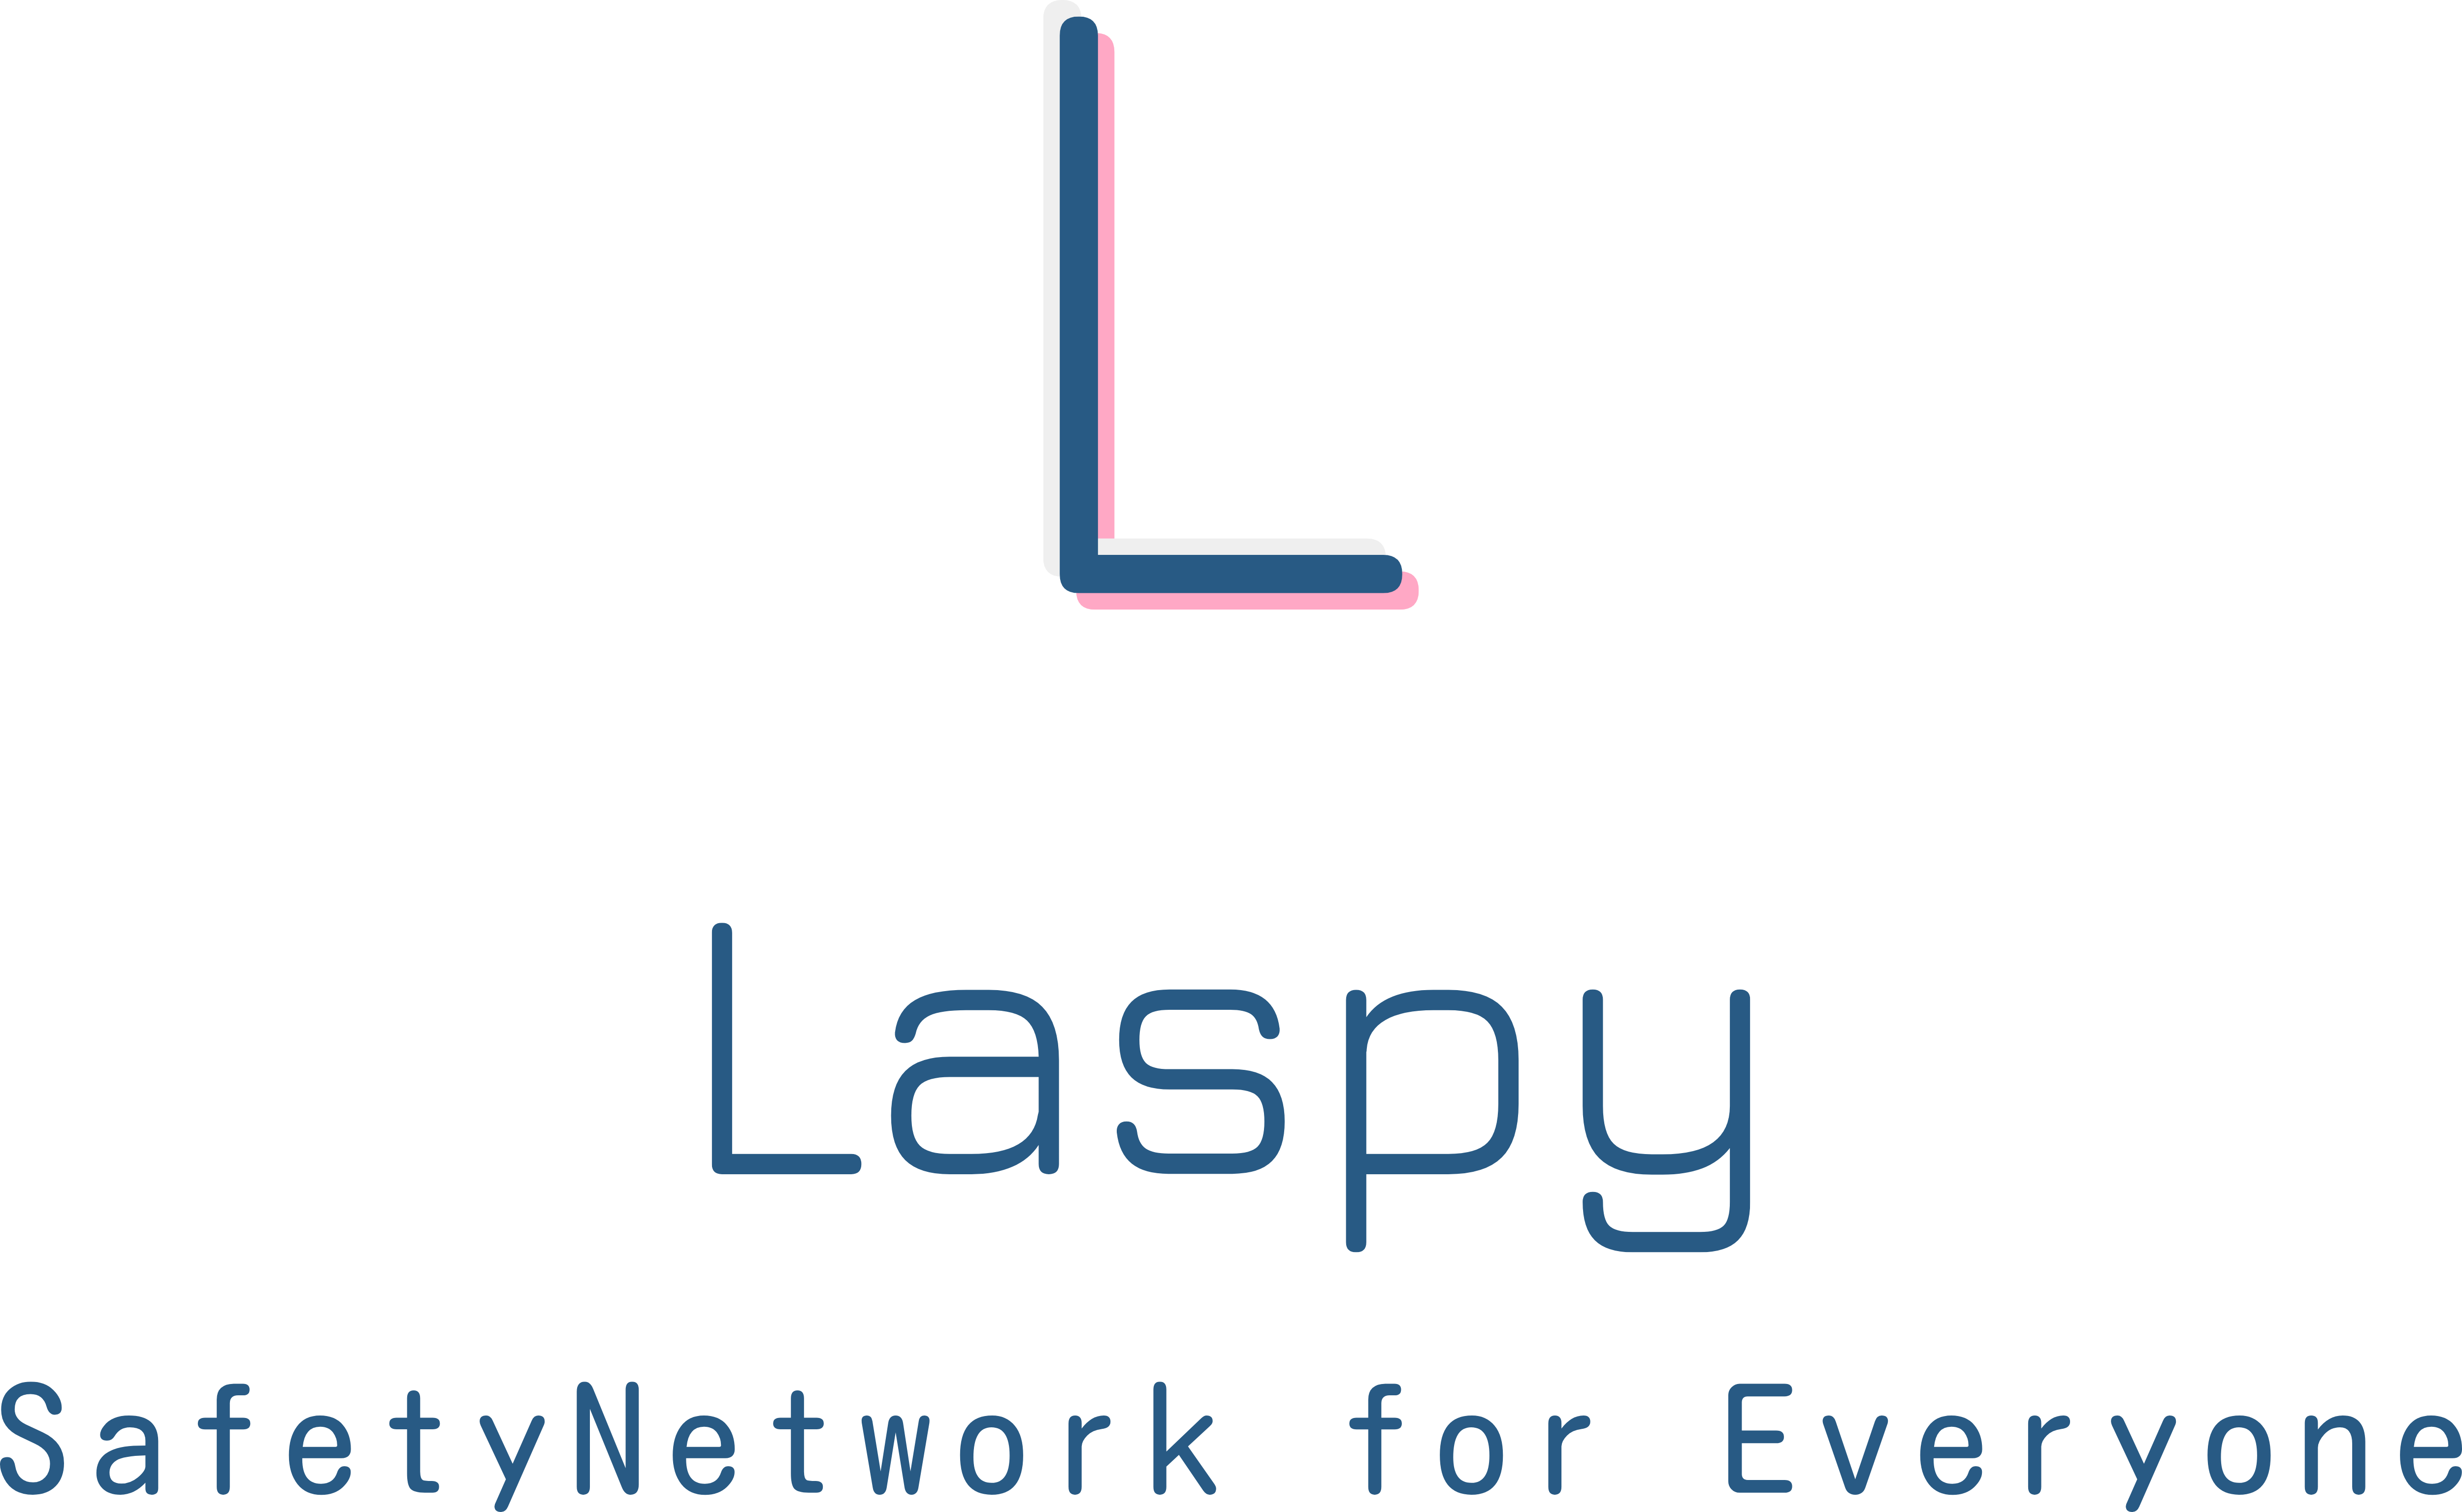 株式会社Laspy